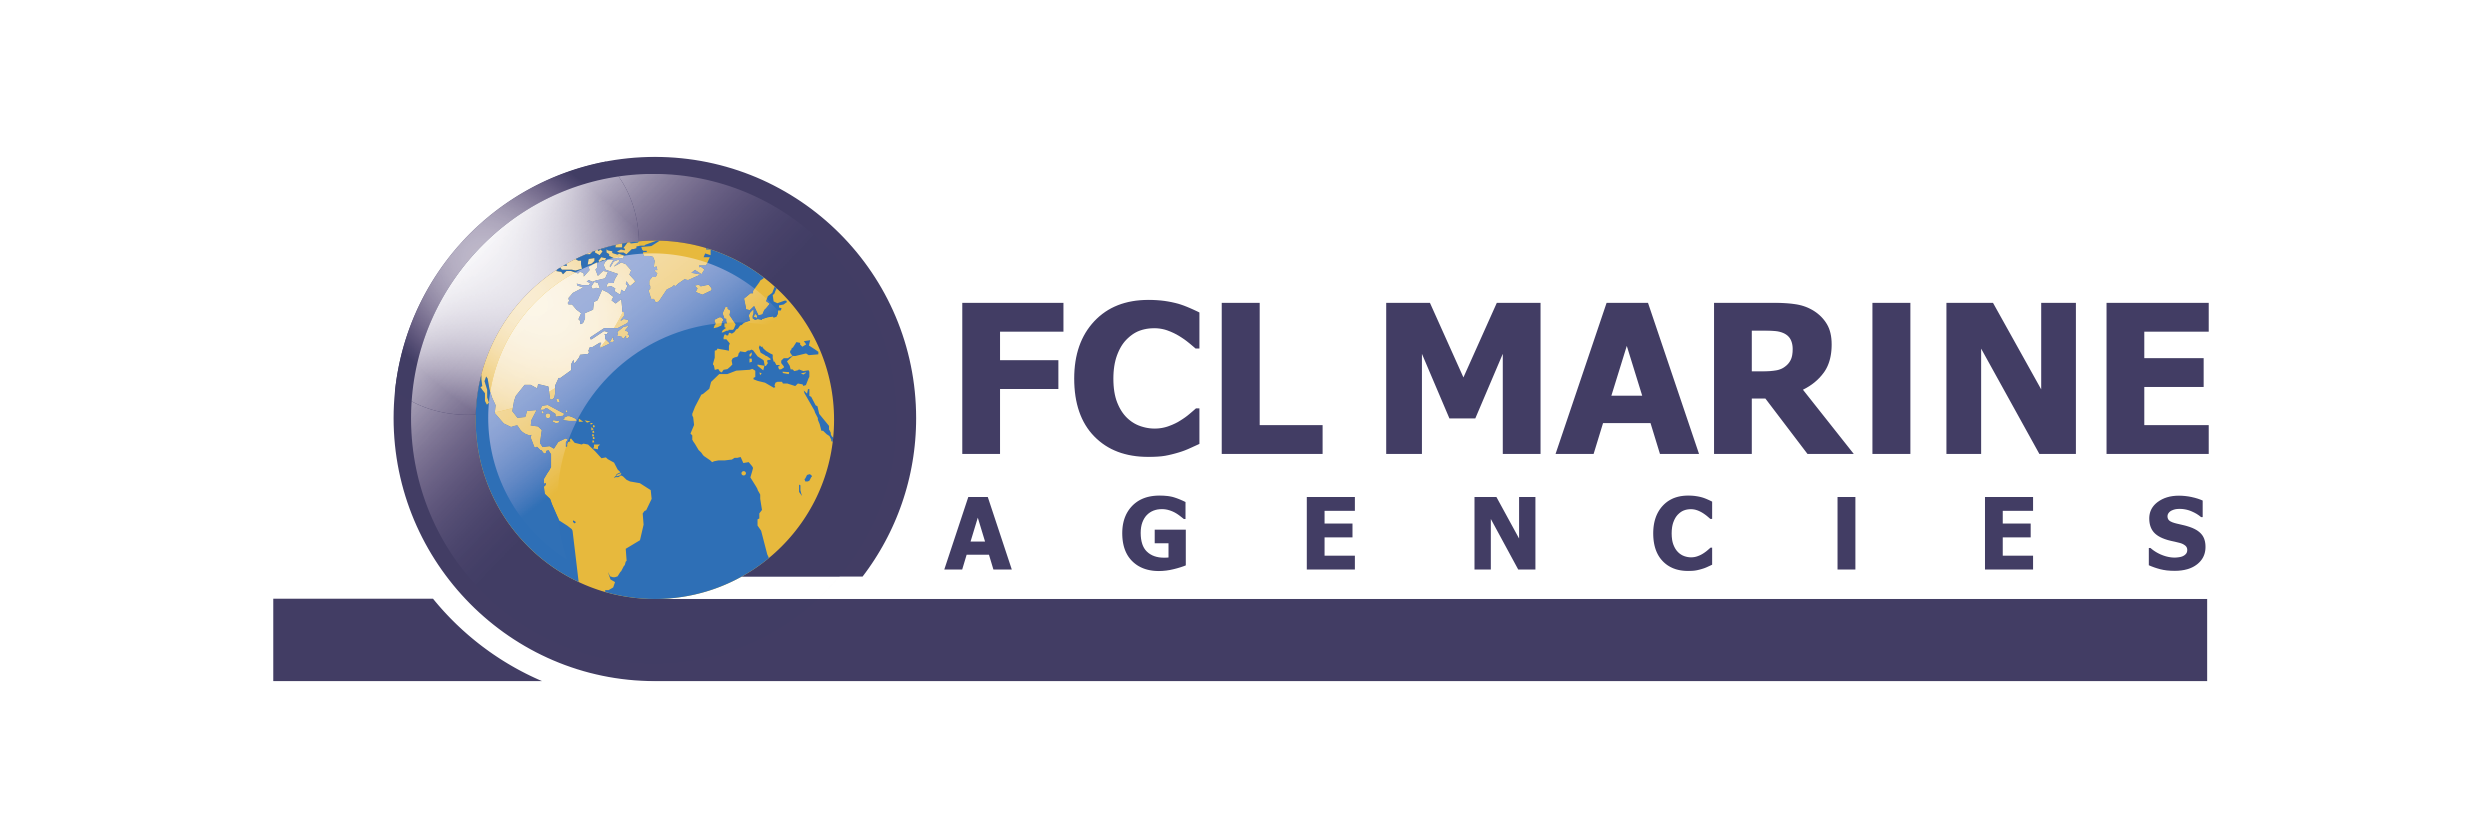 FCL Marine Agencies logo